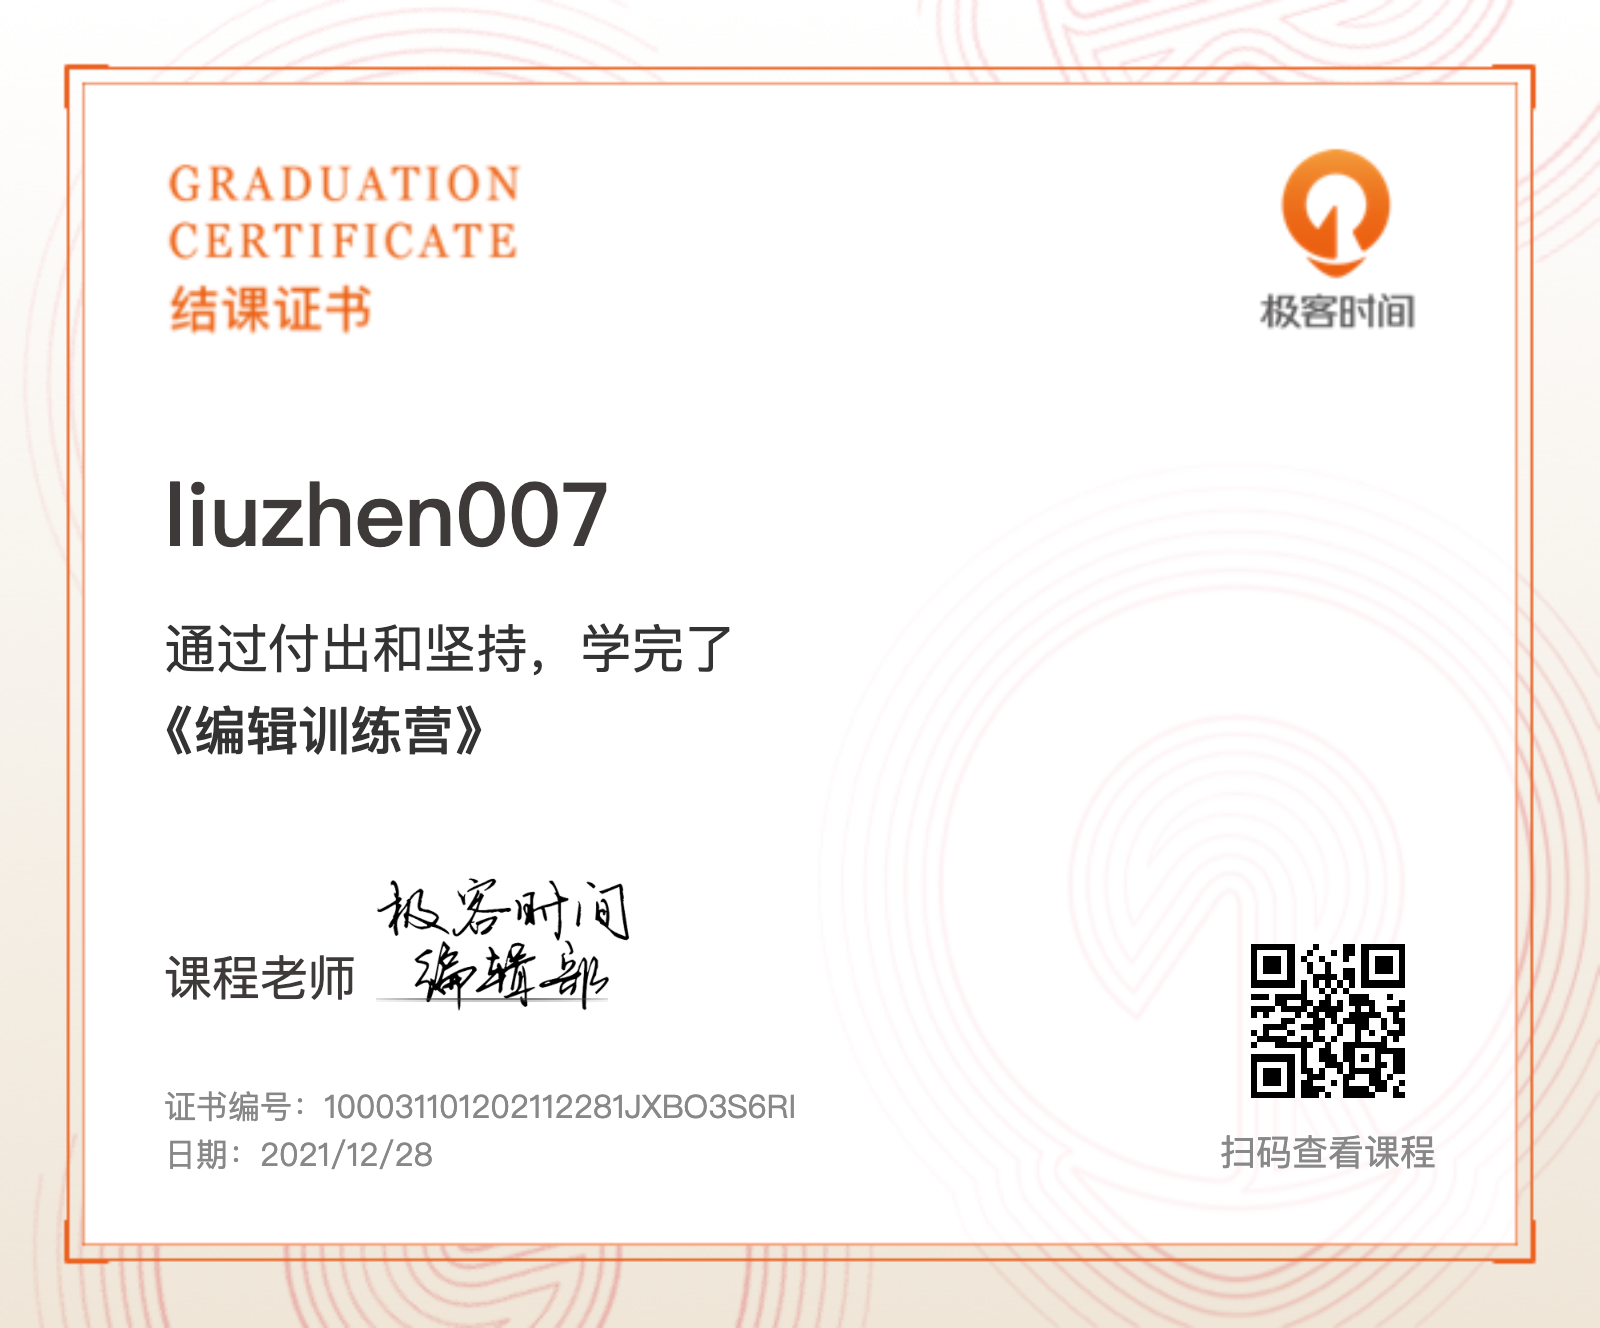 解决报错：SSL certificate problem: certificate has expired